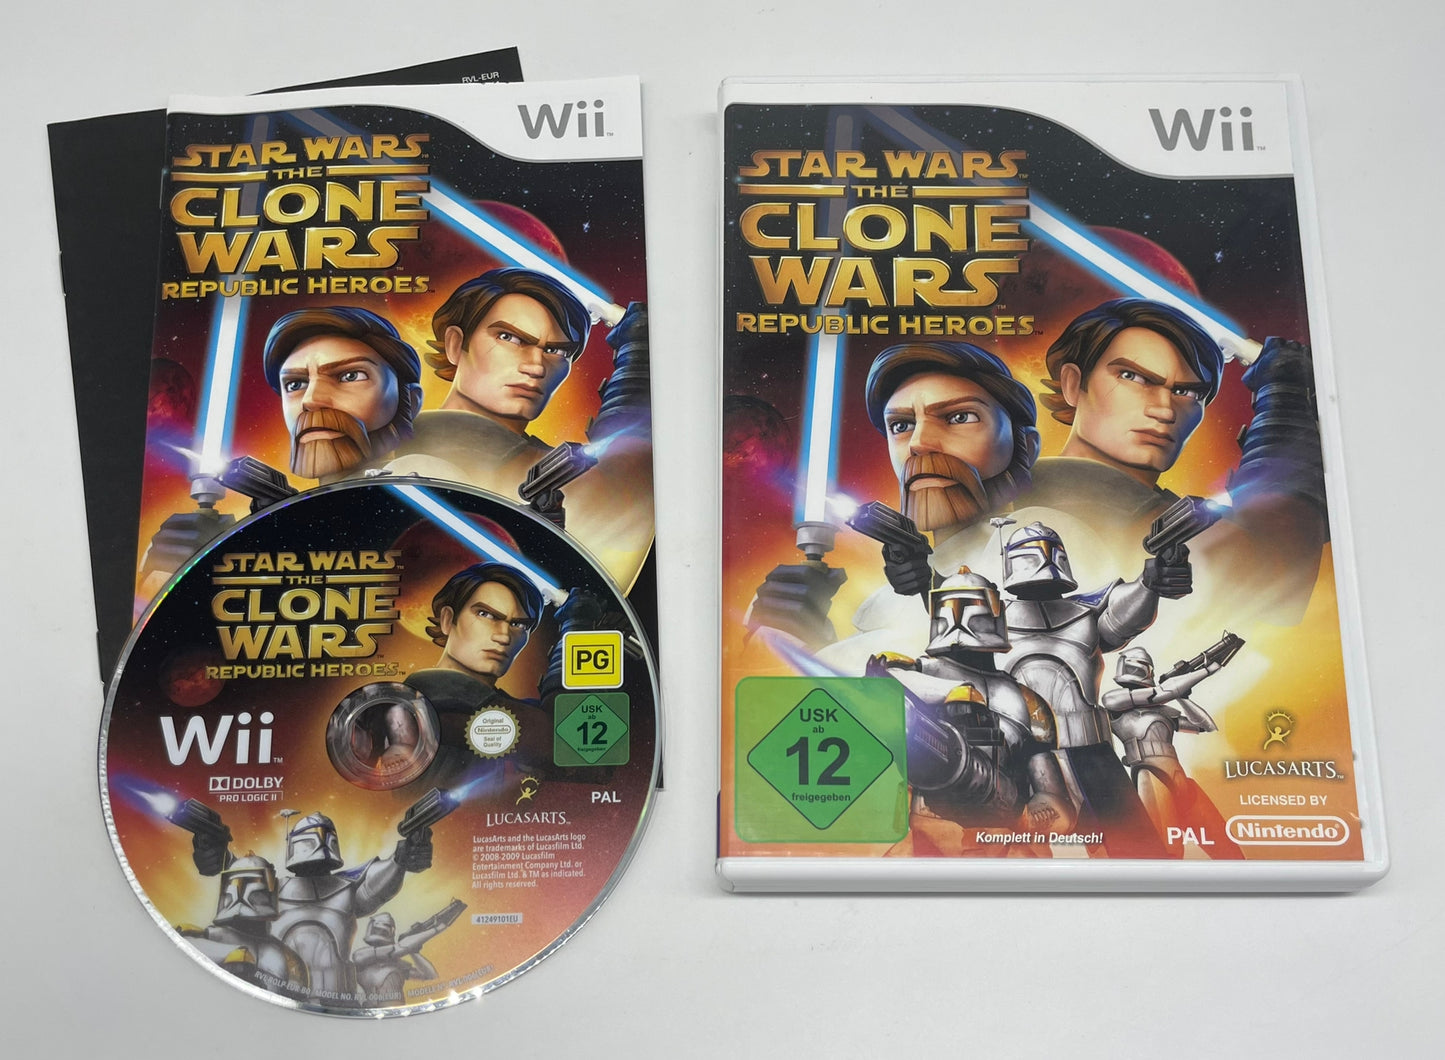 Star Wars: The Clone Wars - Republic Heroes OVP